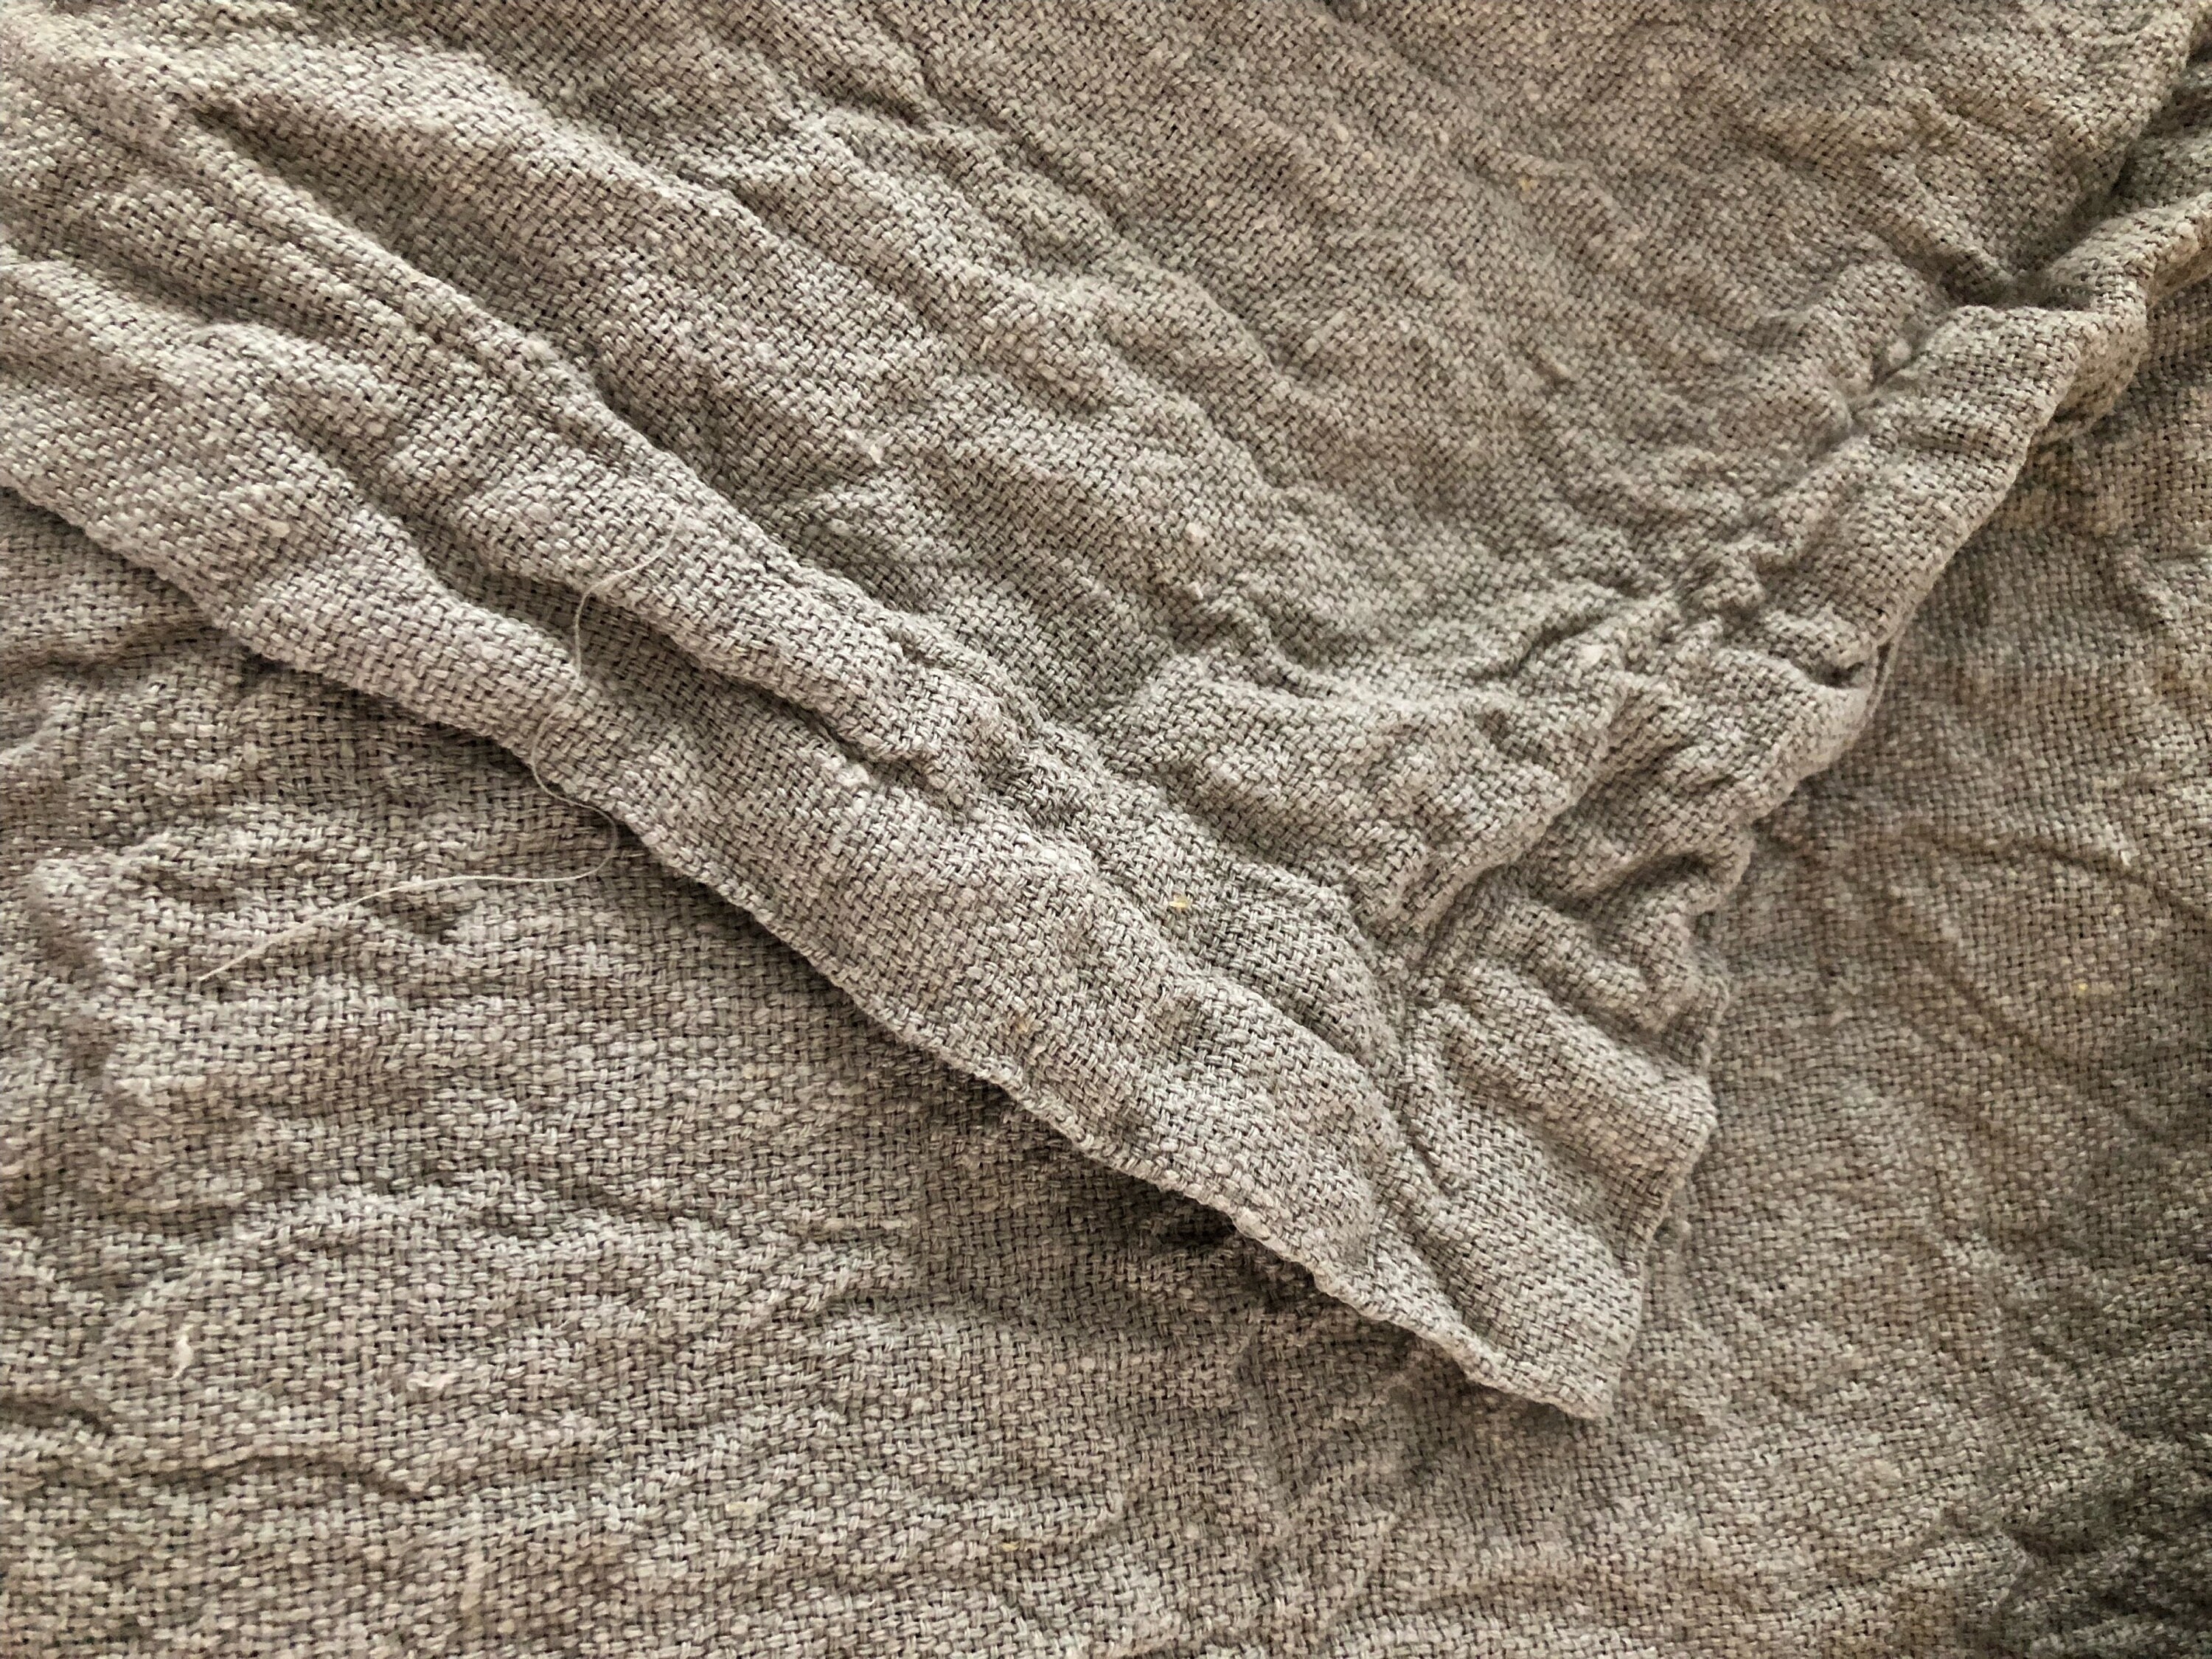 Set of Four Durable Linen tea towels, French kitchen towels - Linenbee